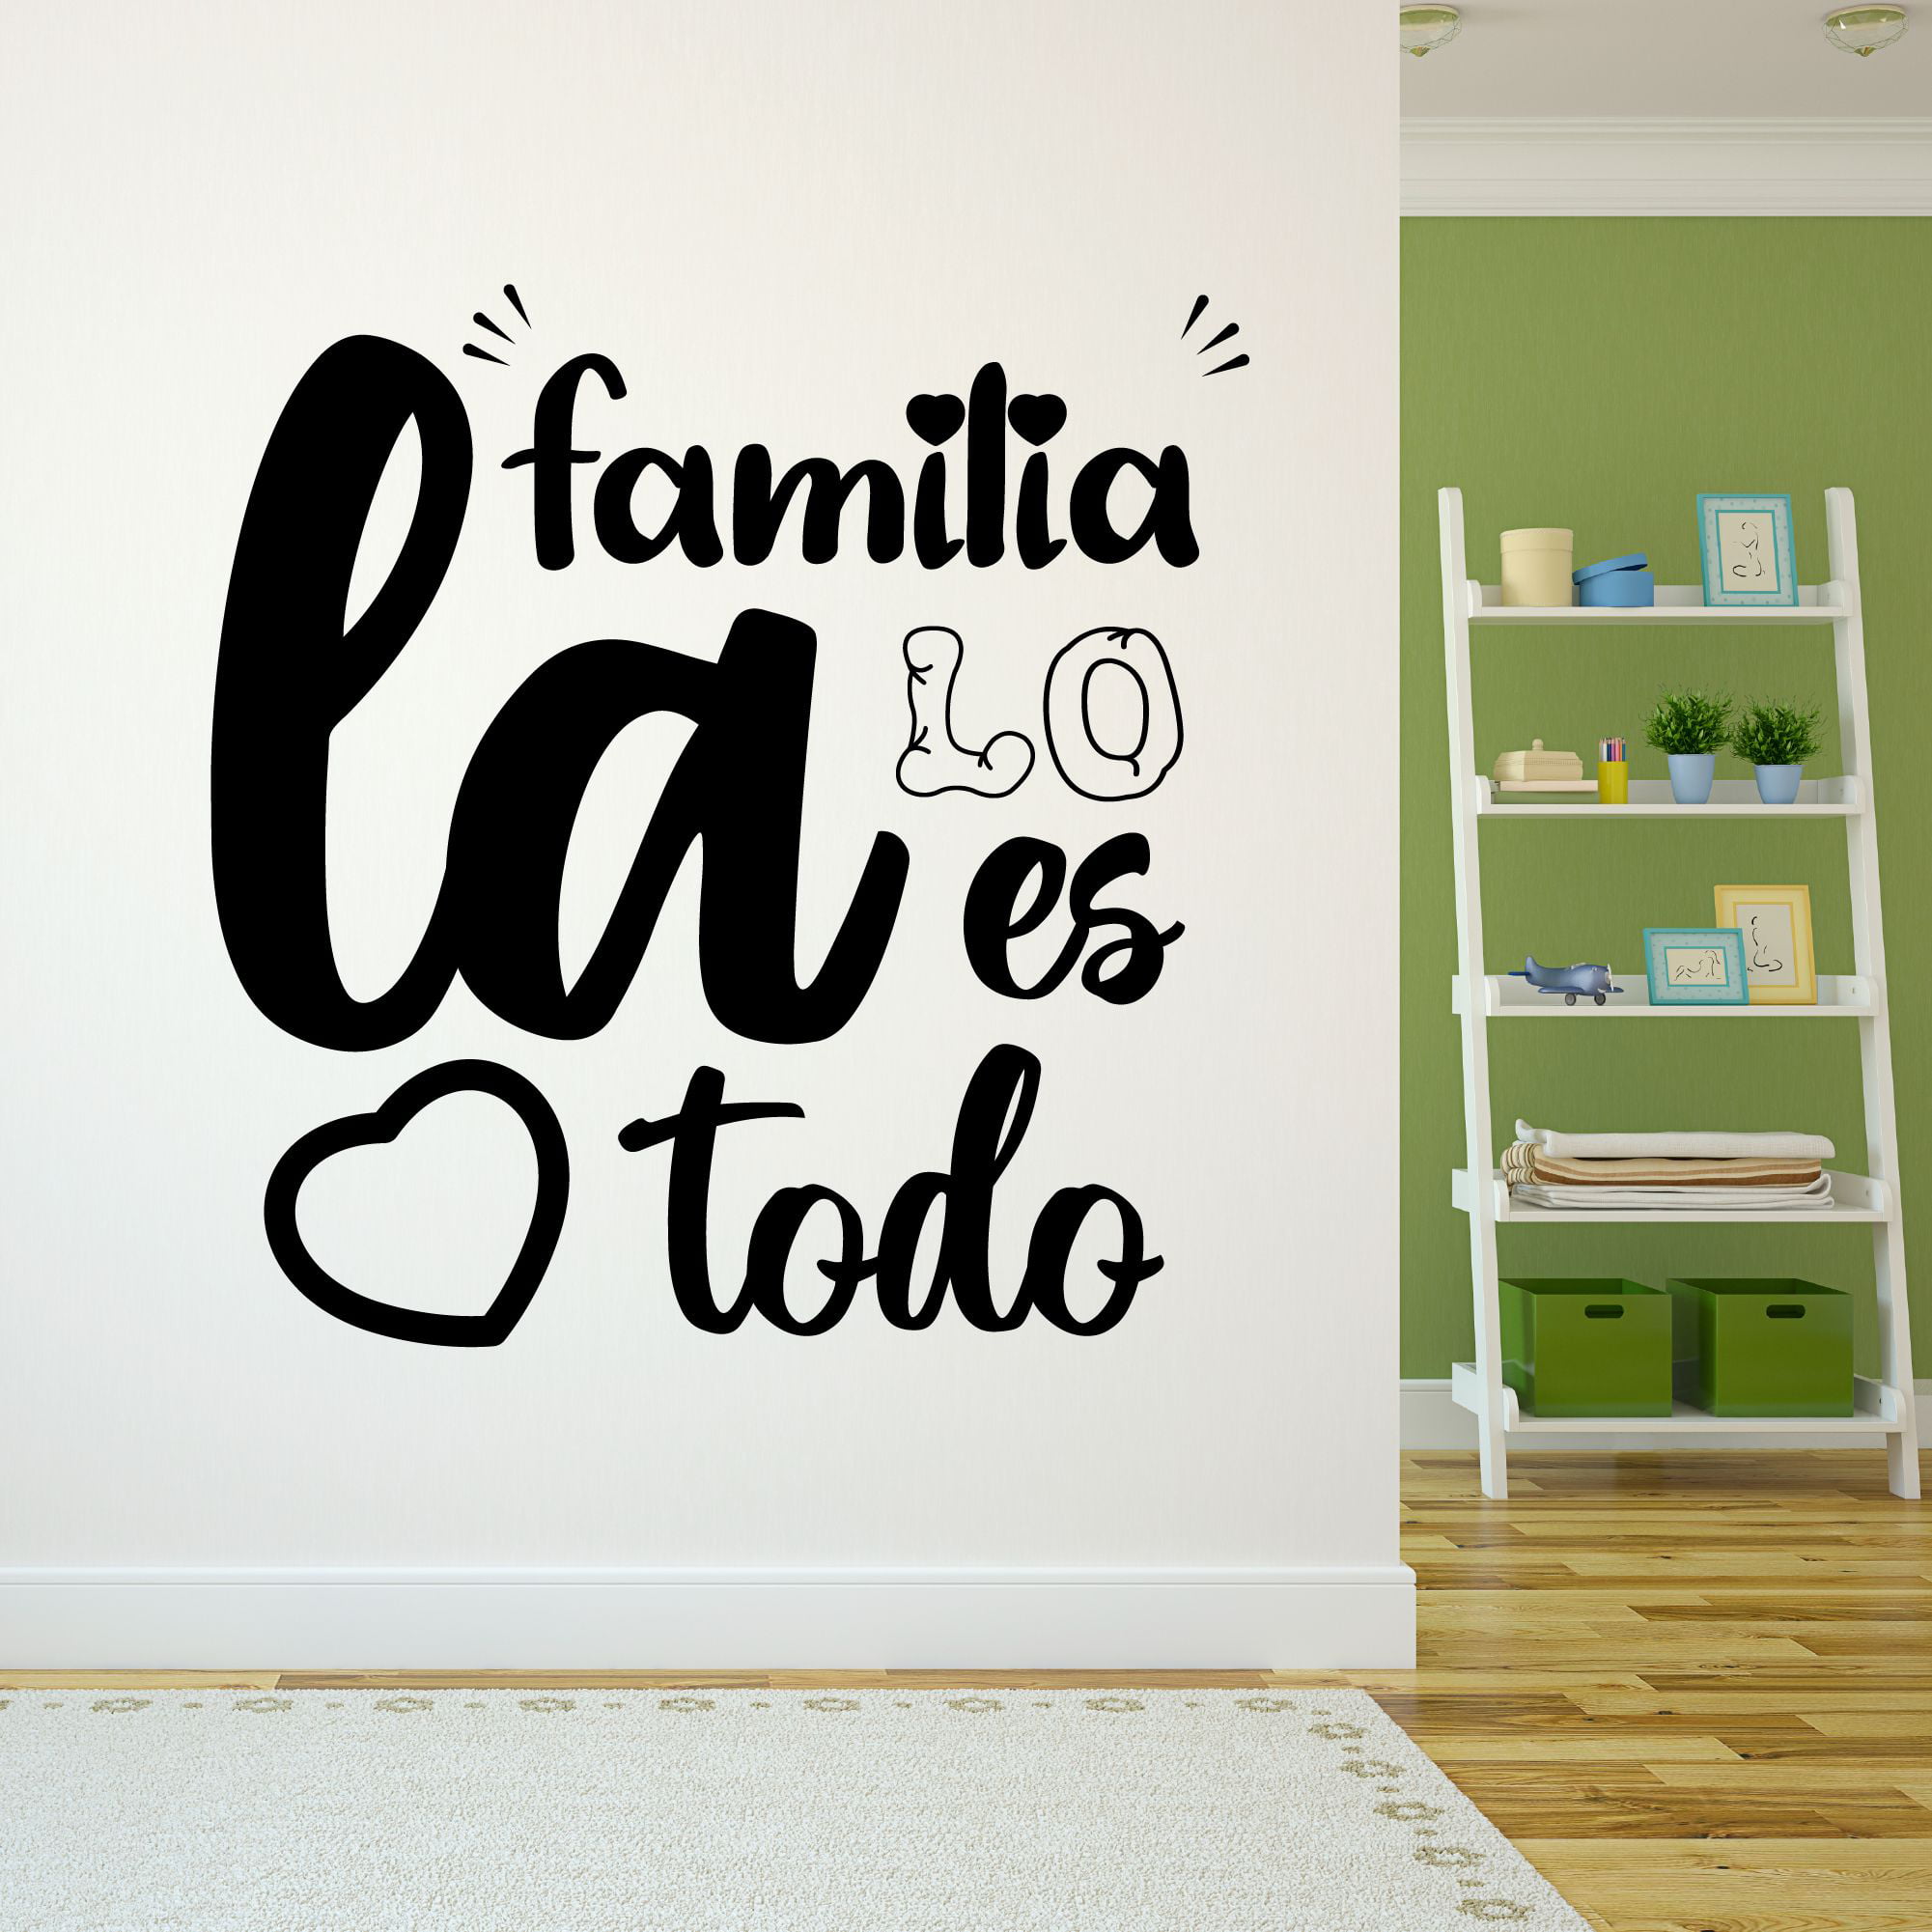 Spanish Wall Decals for Children Bedroom - El Amor de la Familia